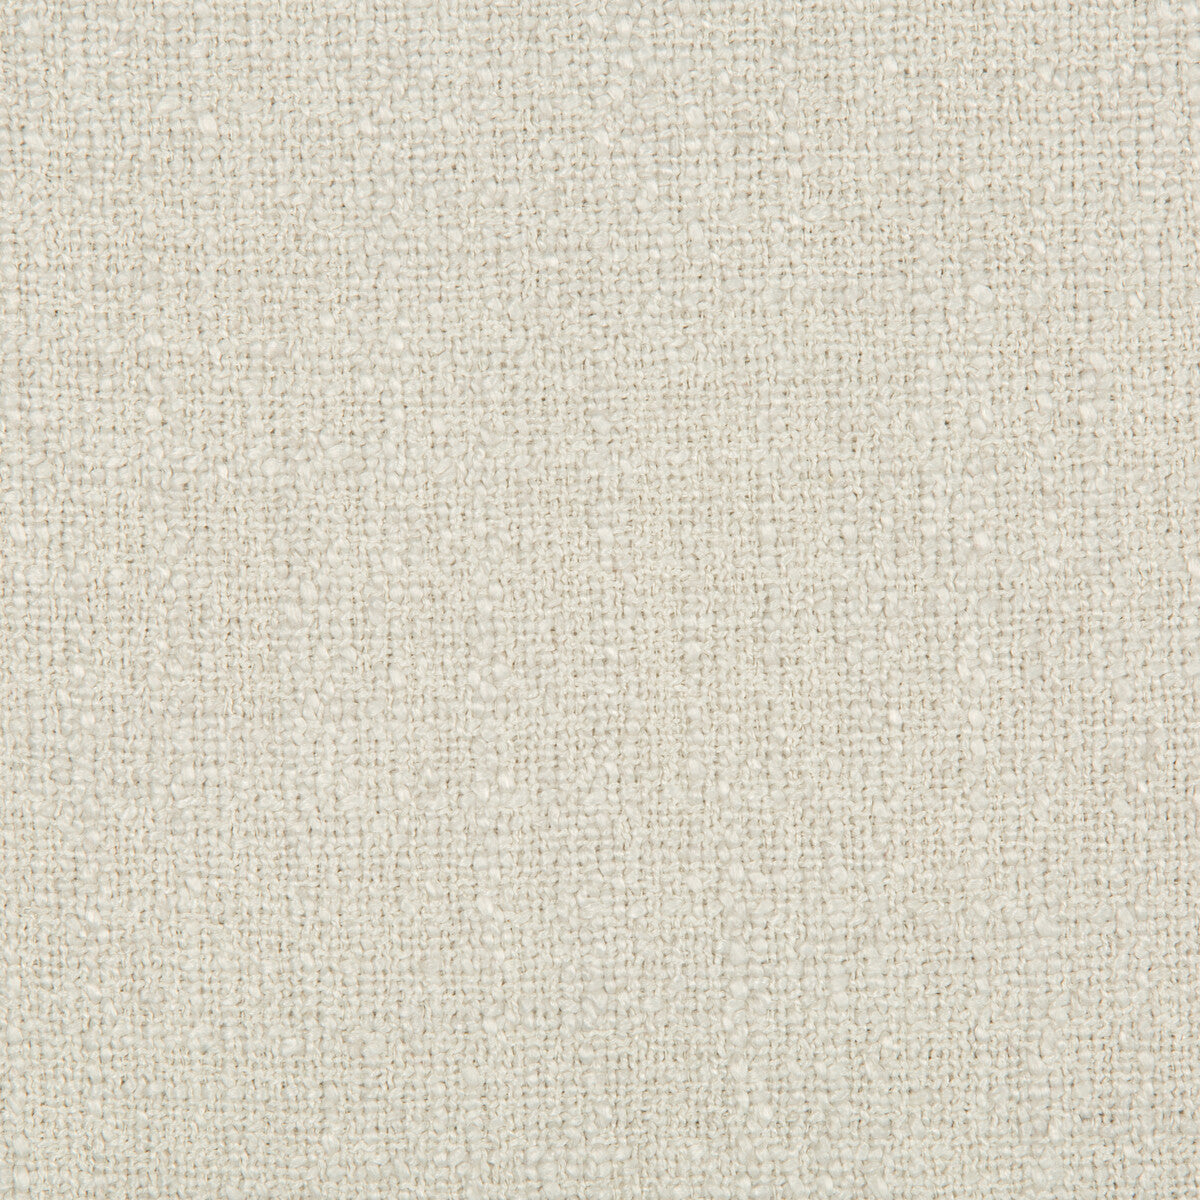 Kravet Smart fabric in 35147-1101 color - pattern 35147.1101.0 - by Kravet Smart